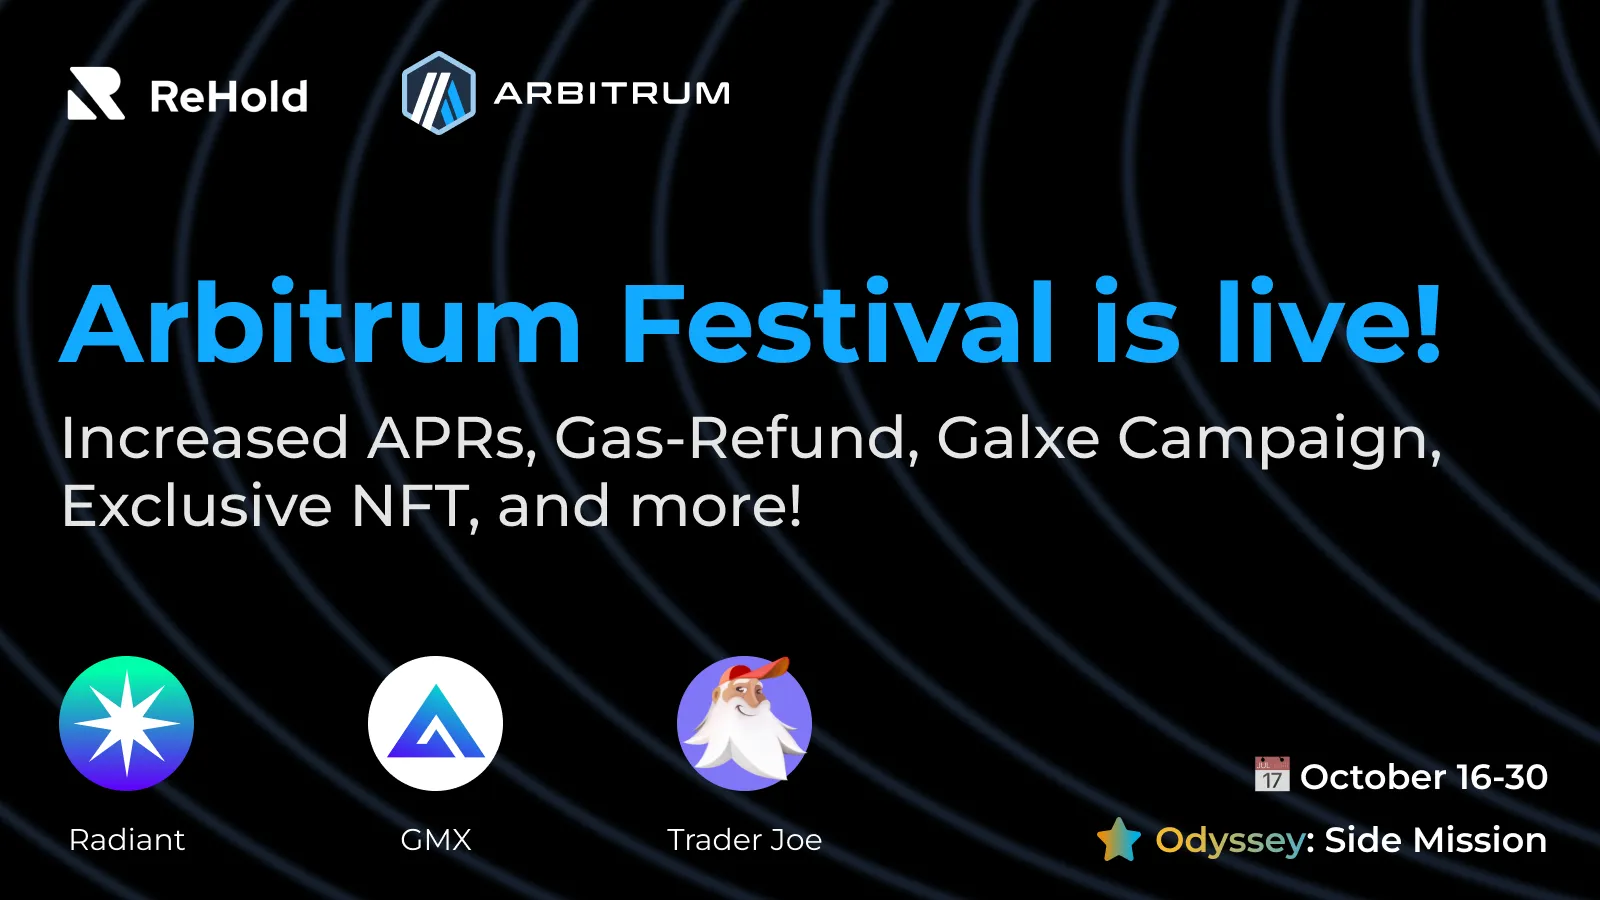 The Arbitrum Festival is LIVE!